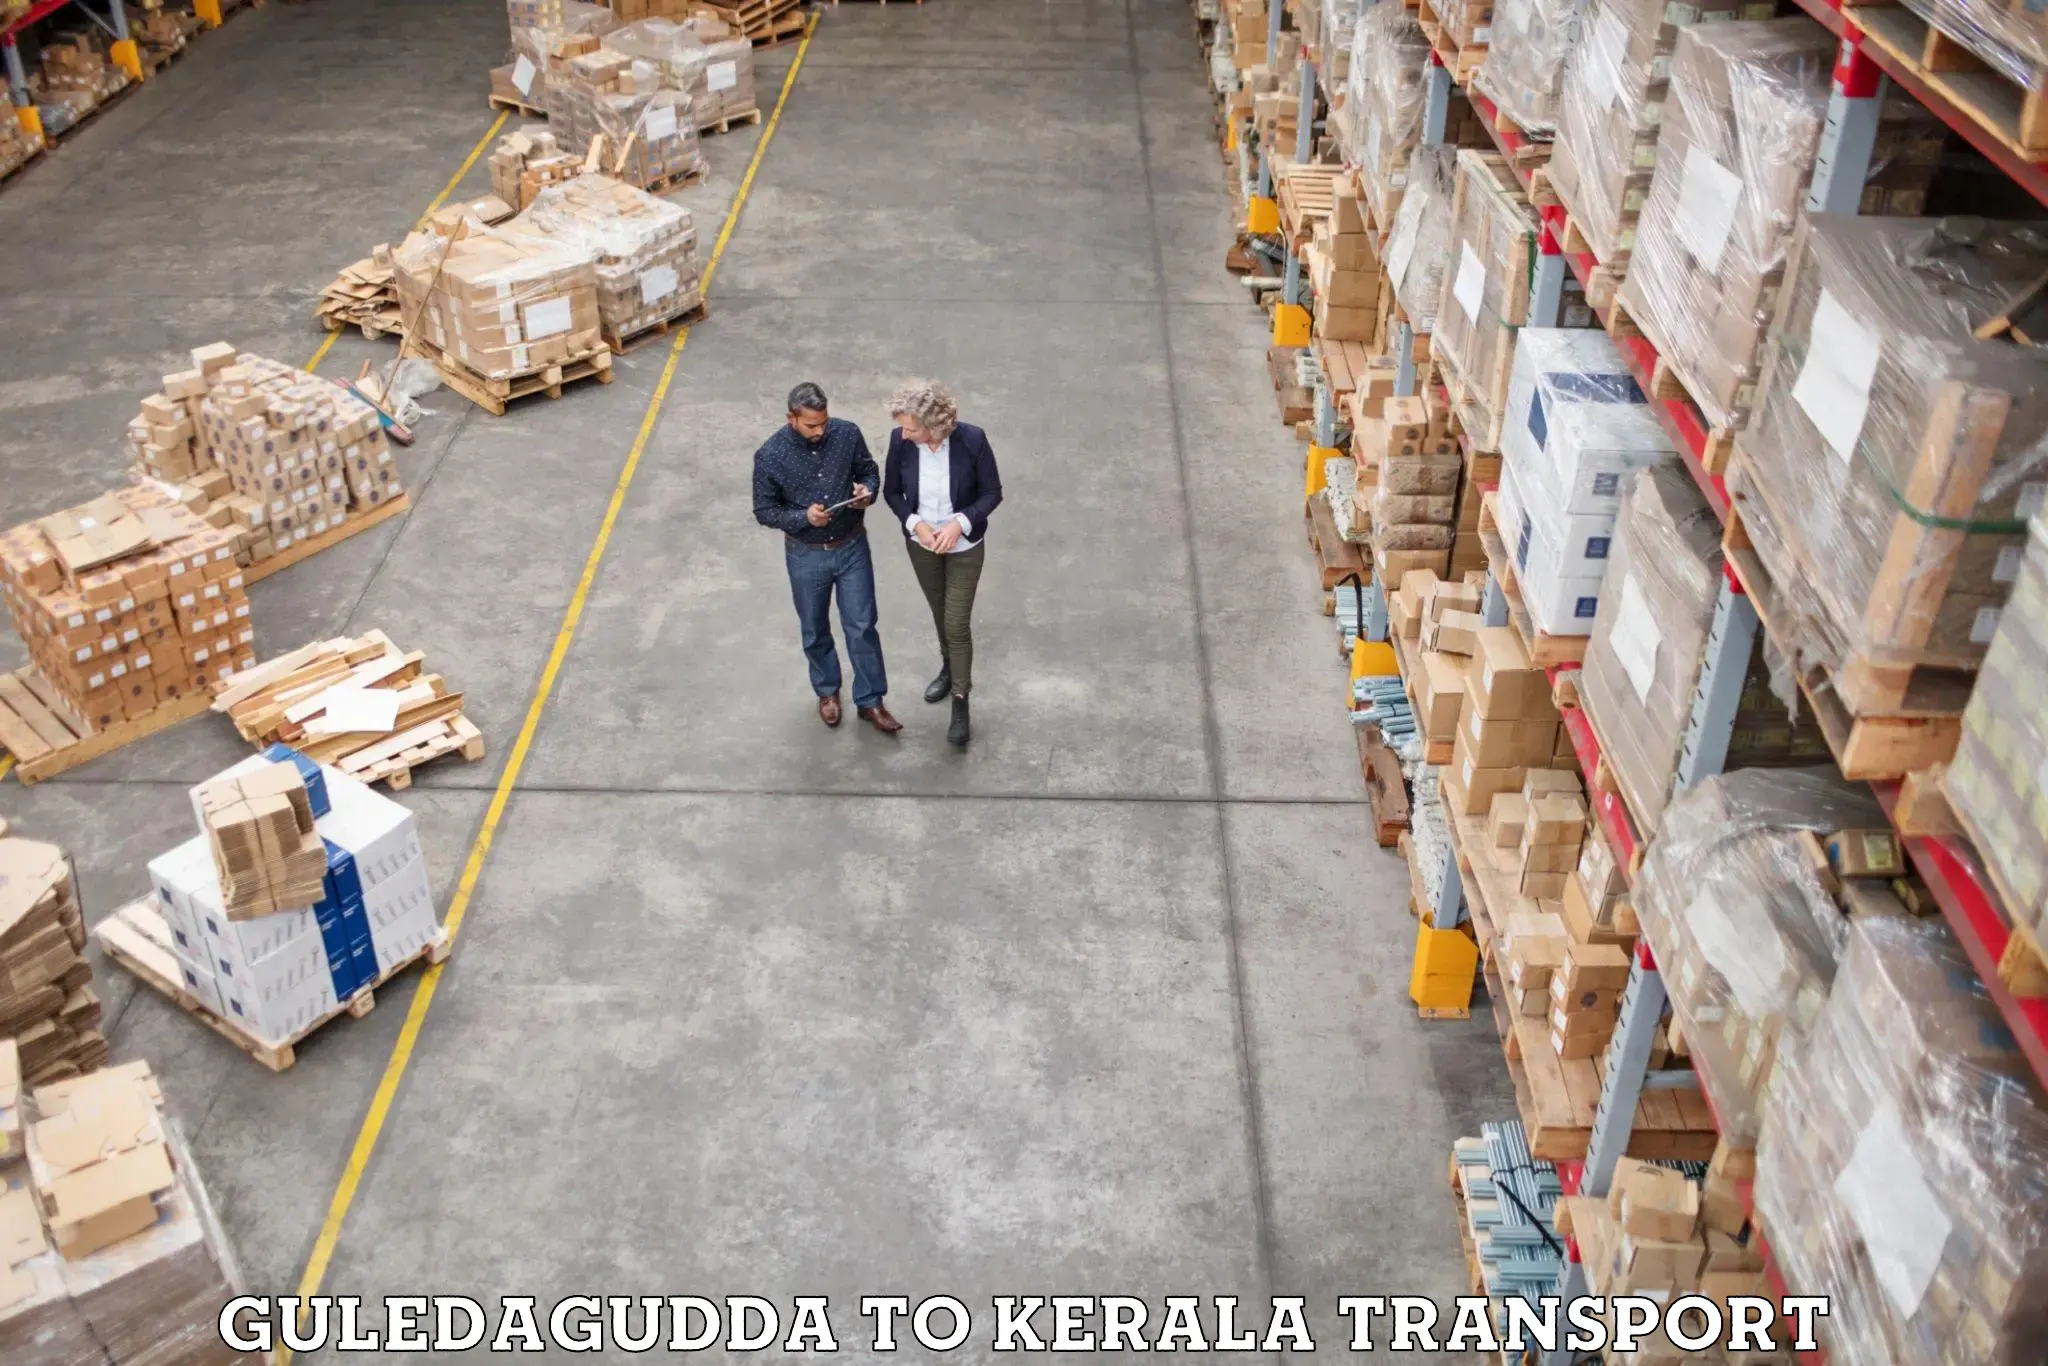 Road transport online services Guledagudda to Kochi